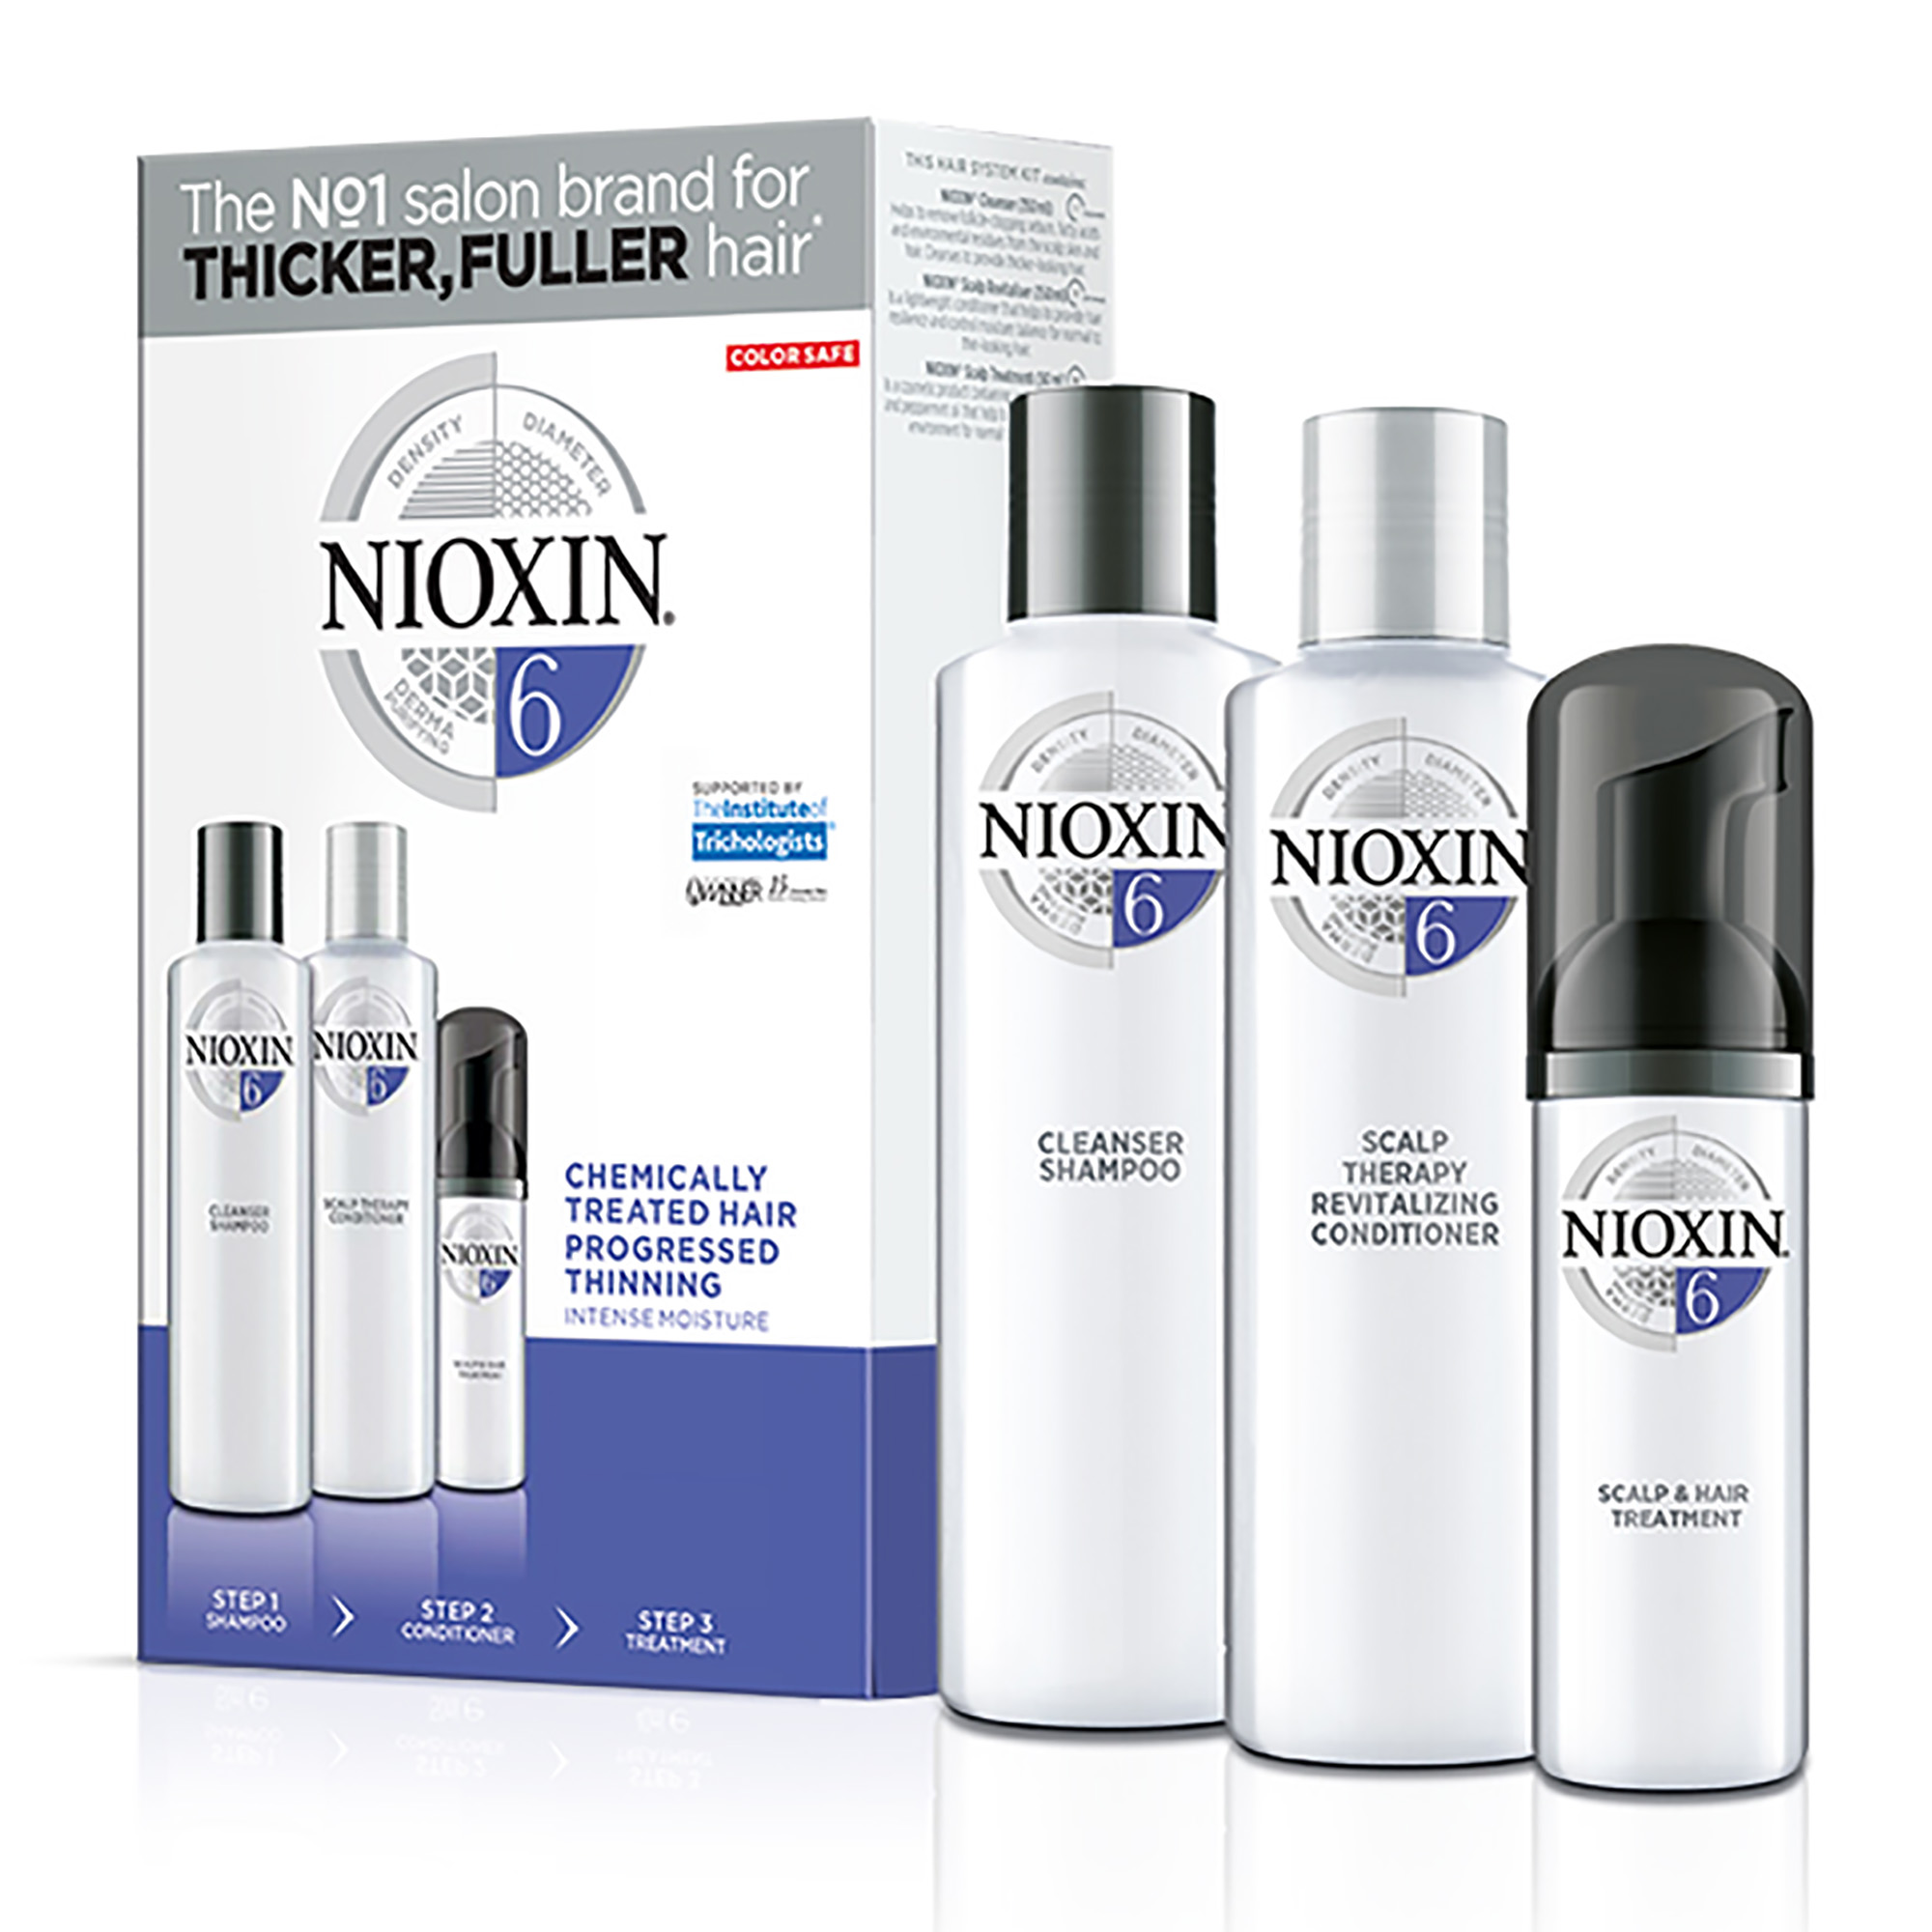 NIOXIN Набор для волос Система 6 (шампунь очищающий 150 мл, кондиционер увлажняющий 150 мл, маска питательная 40 мл)